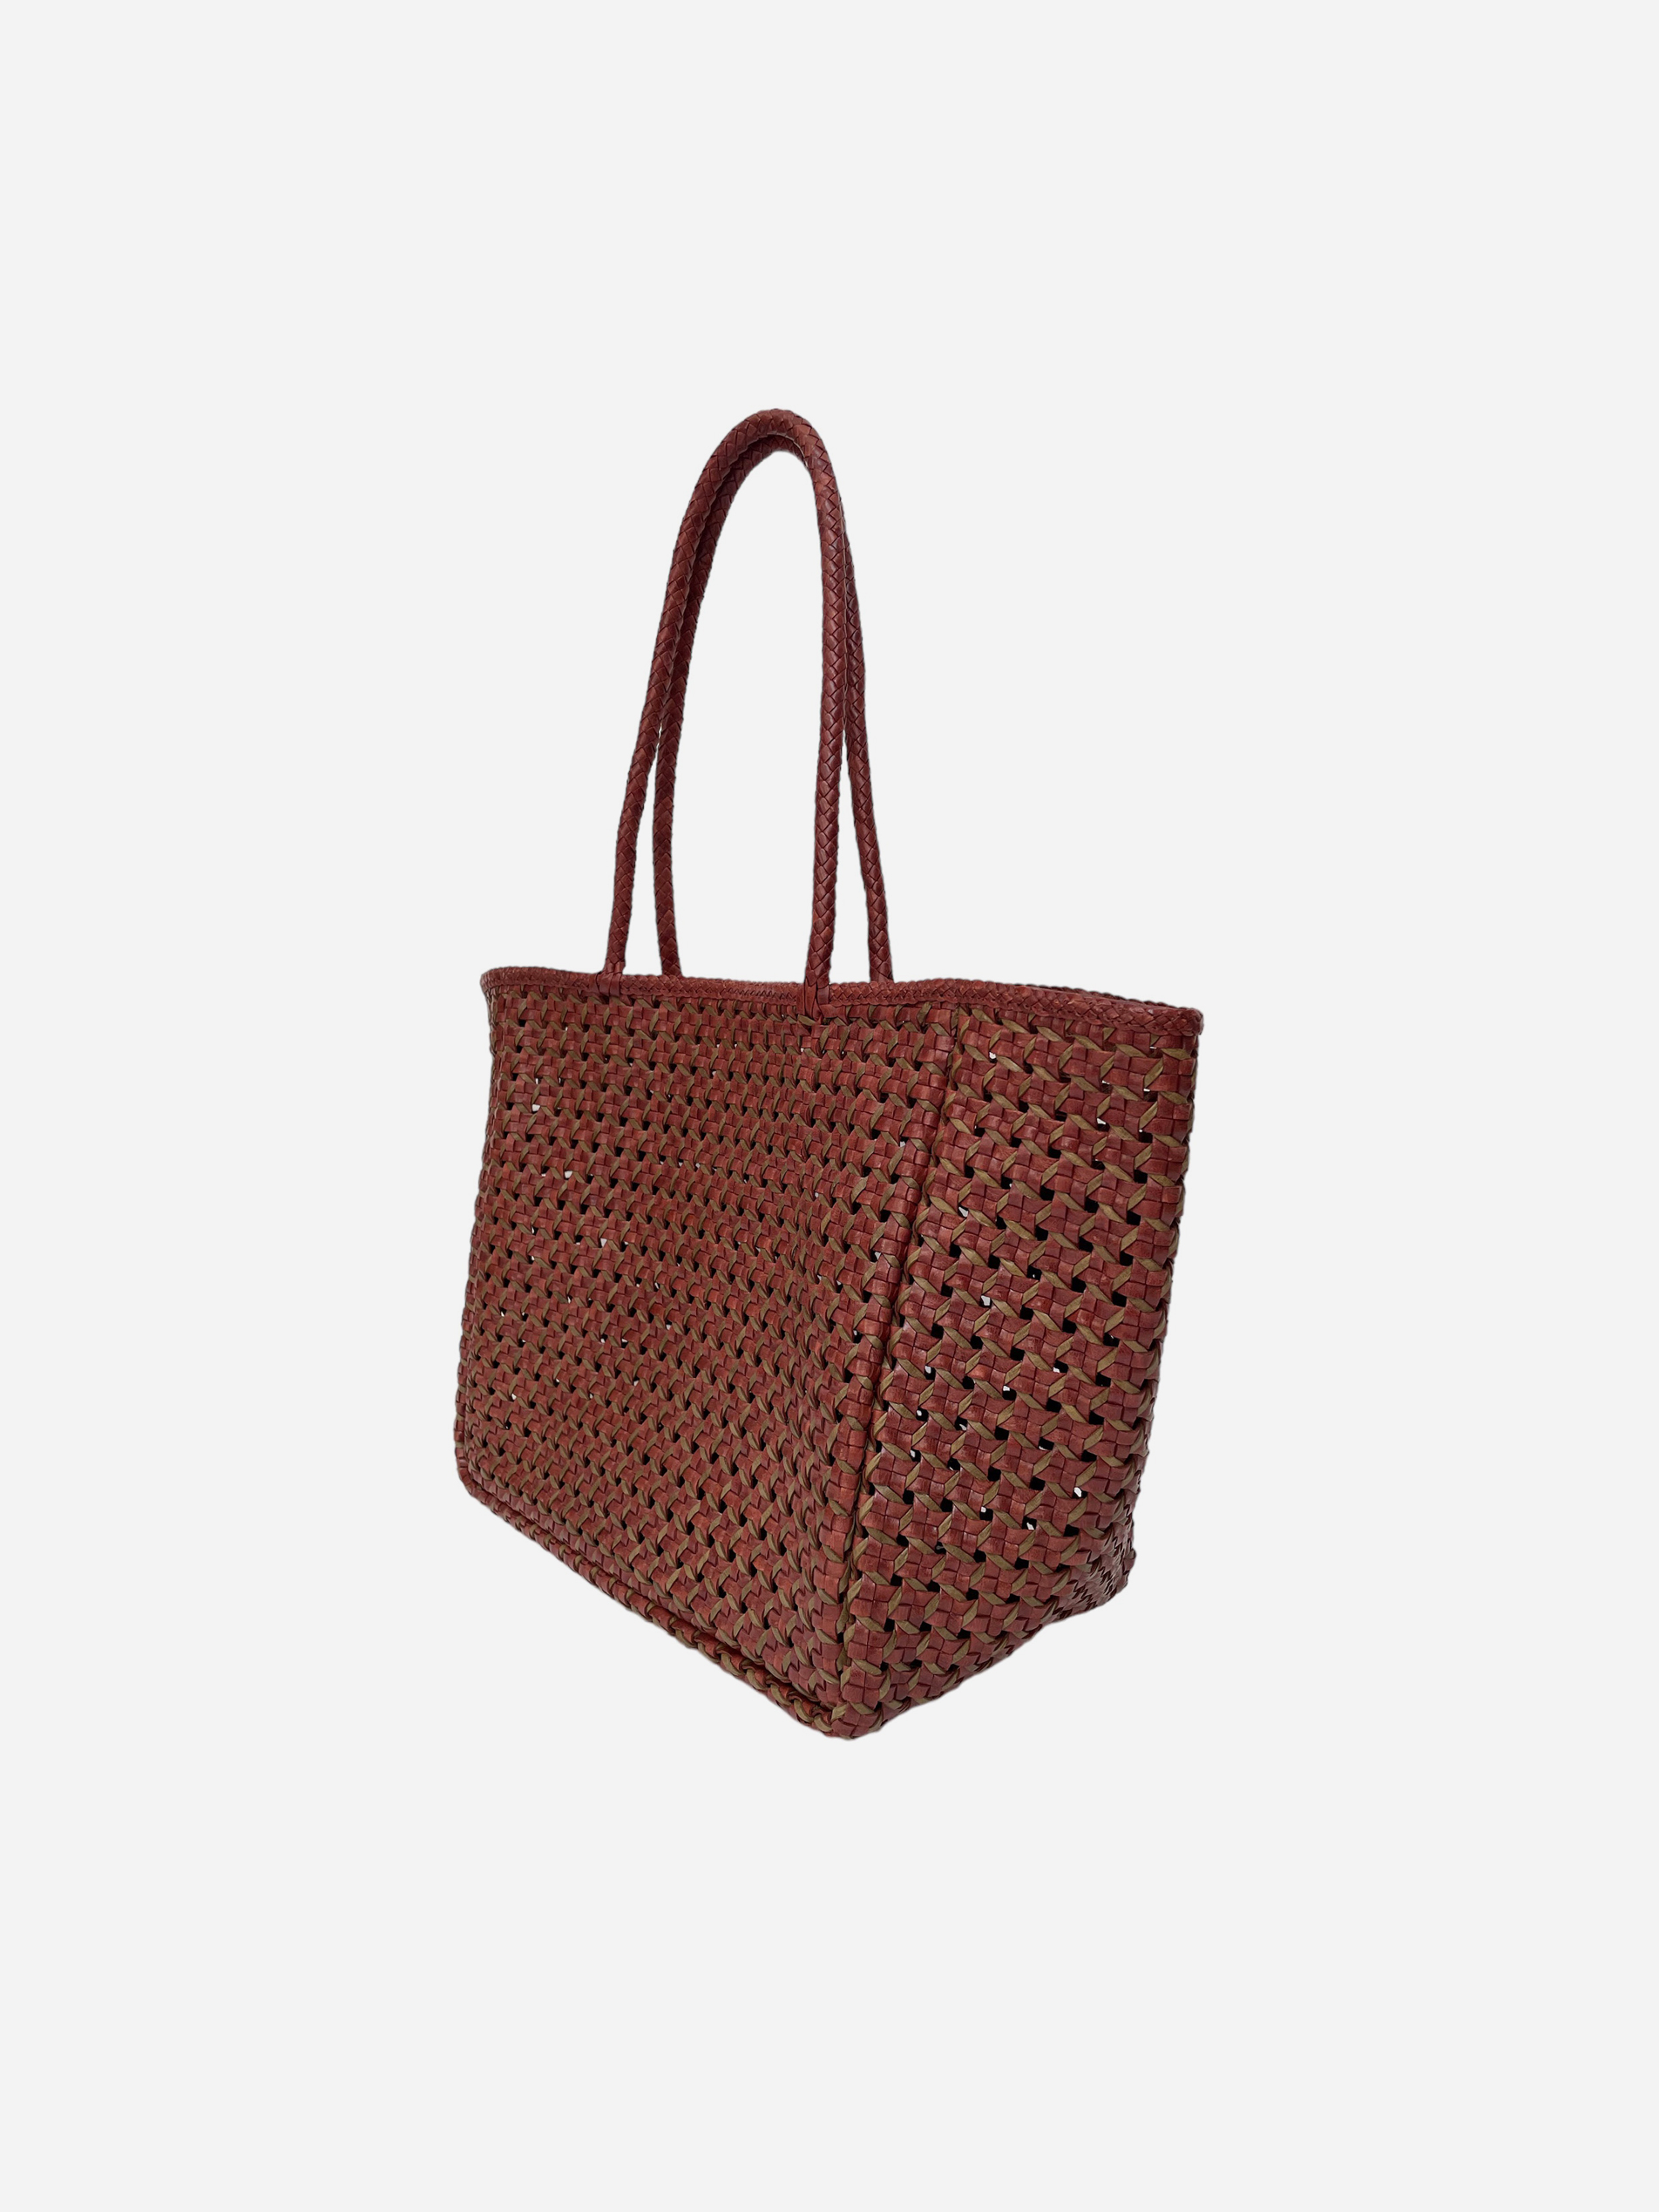 MNH-PS-ANNETTE-CUIR-New-Terra-x-Kaki-leather-woven-handmade-shoulder-bag-maison-nh-paris-matchboxathens